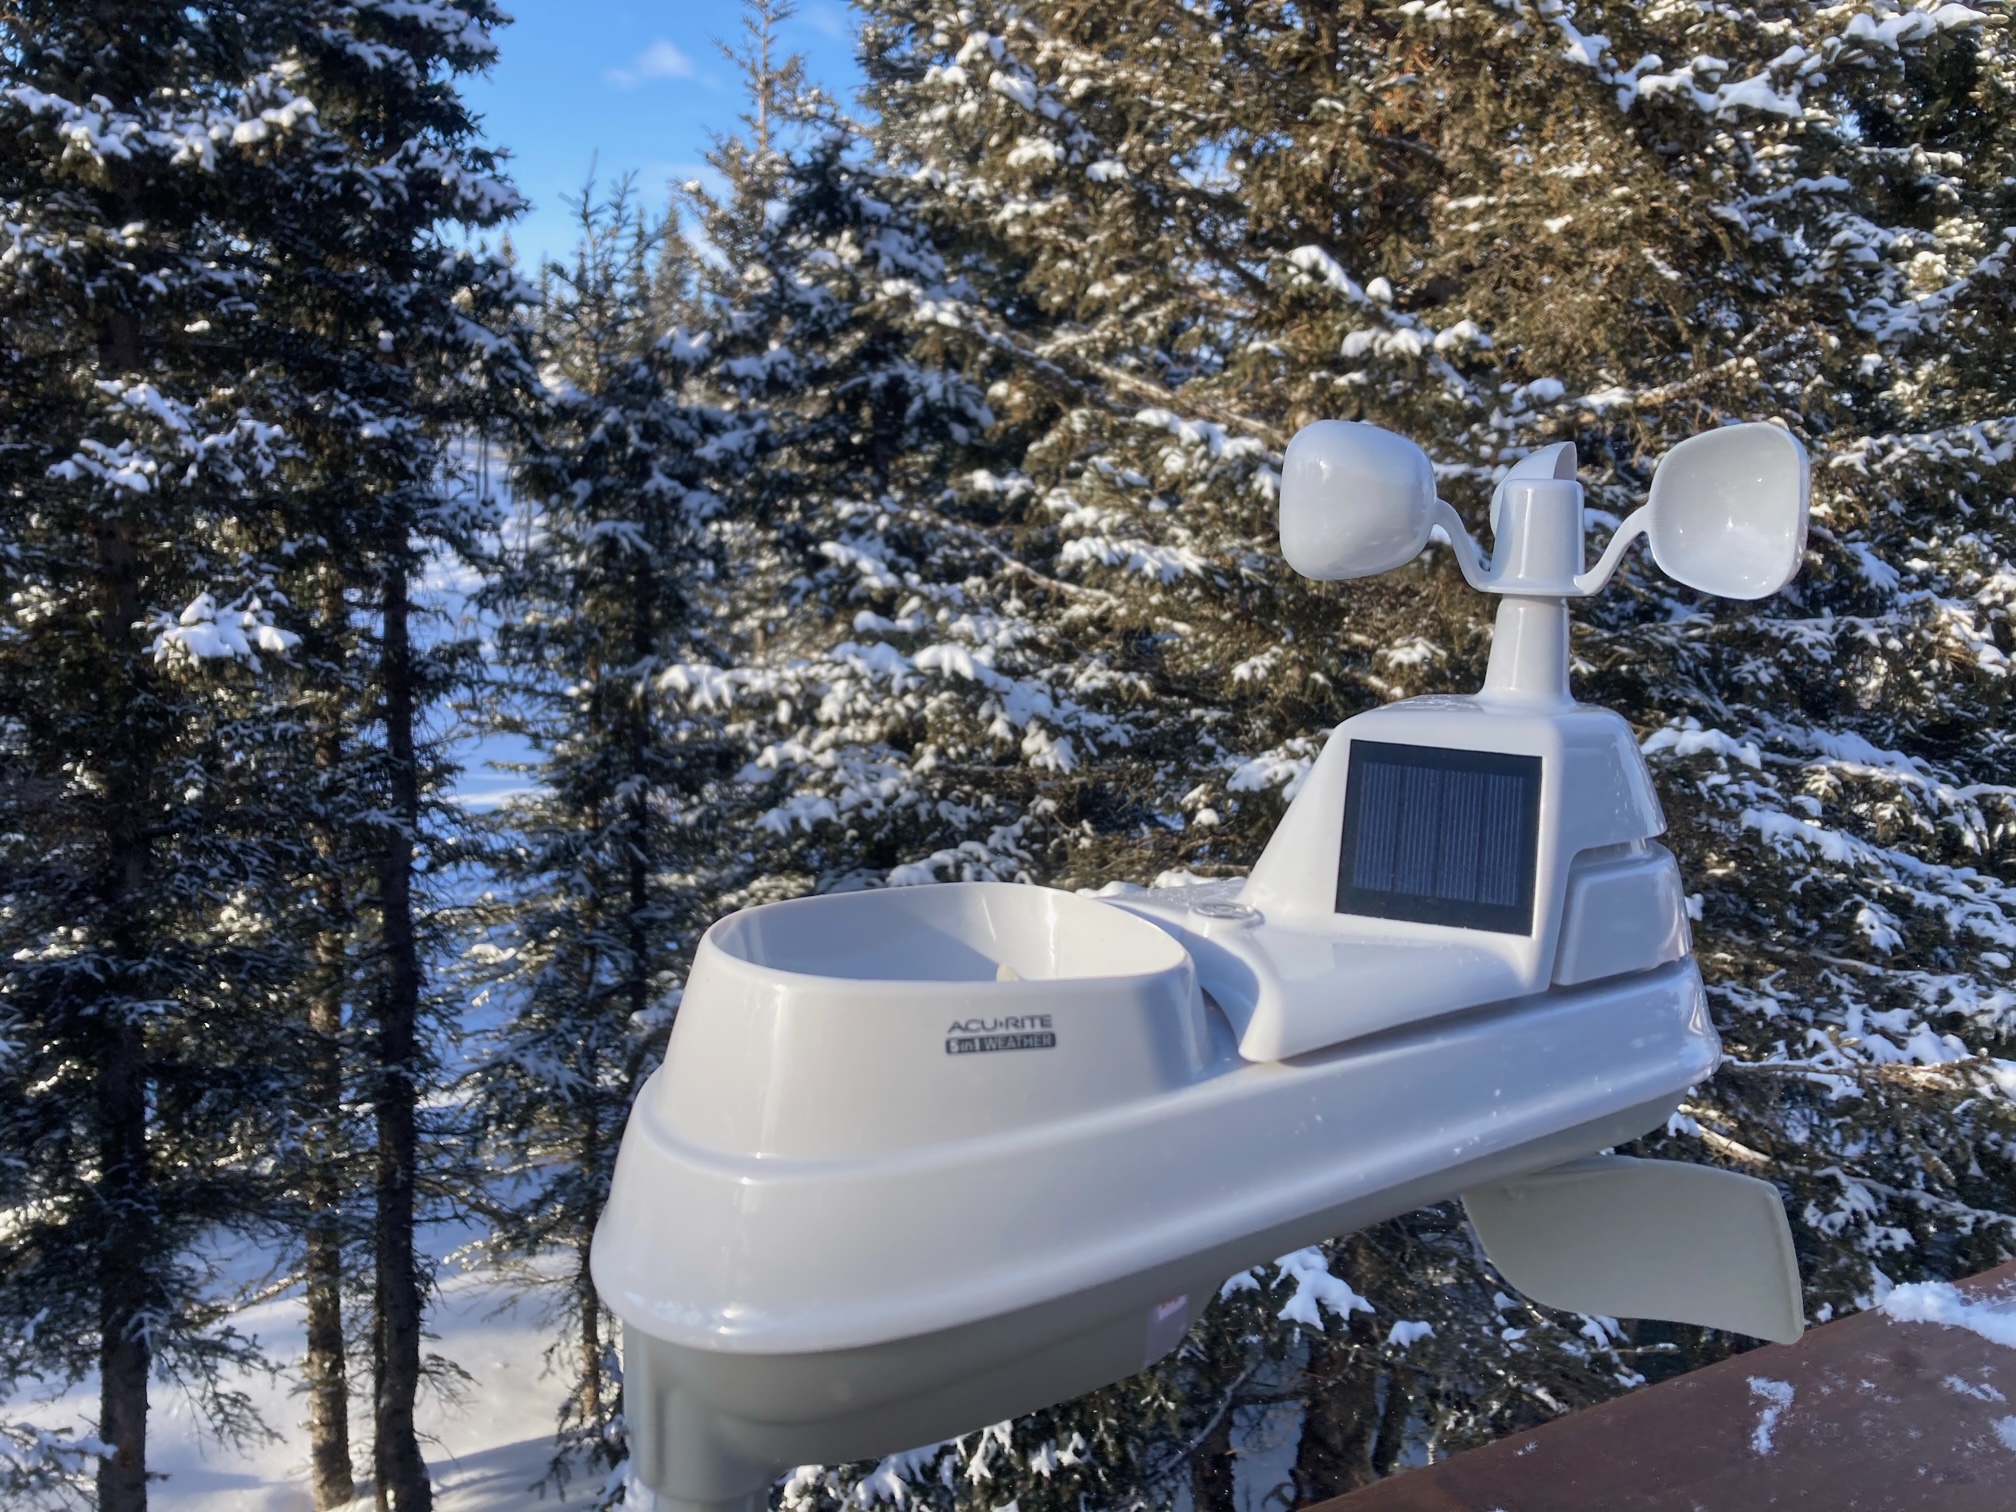 New Acu-Rite Deluxe Wireless Indoor/Outdoor Weather Station Center